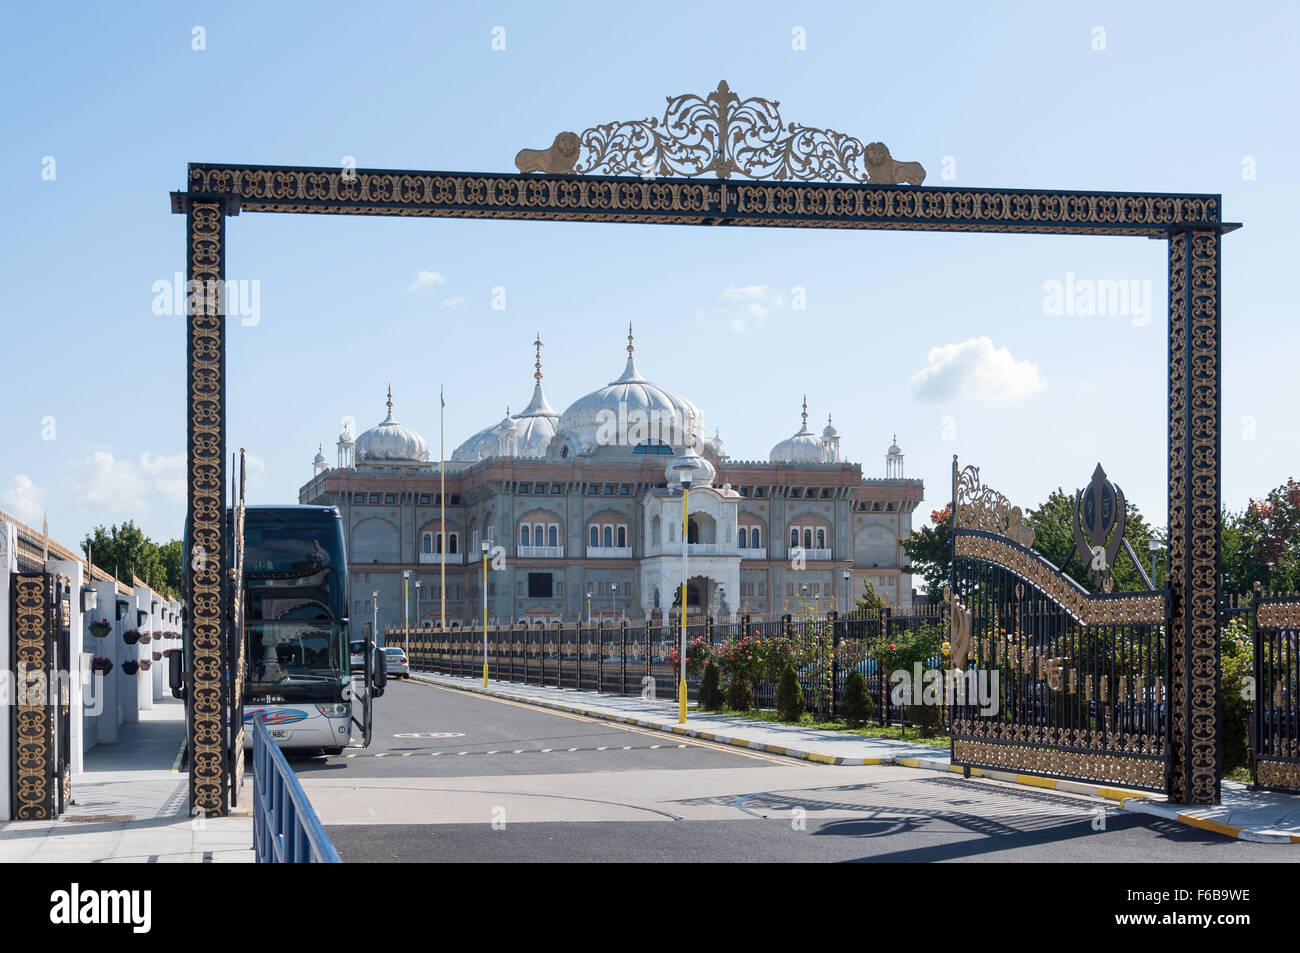 Entrance to Siri Guru Nanak Darbar Gurdwara Temple, Clarence Place, Gravesend, Kent, England, United Kingdom Stock Photo